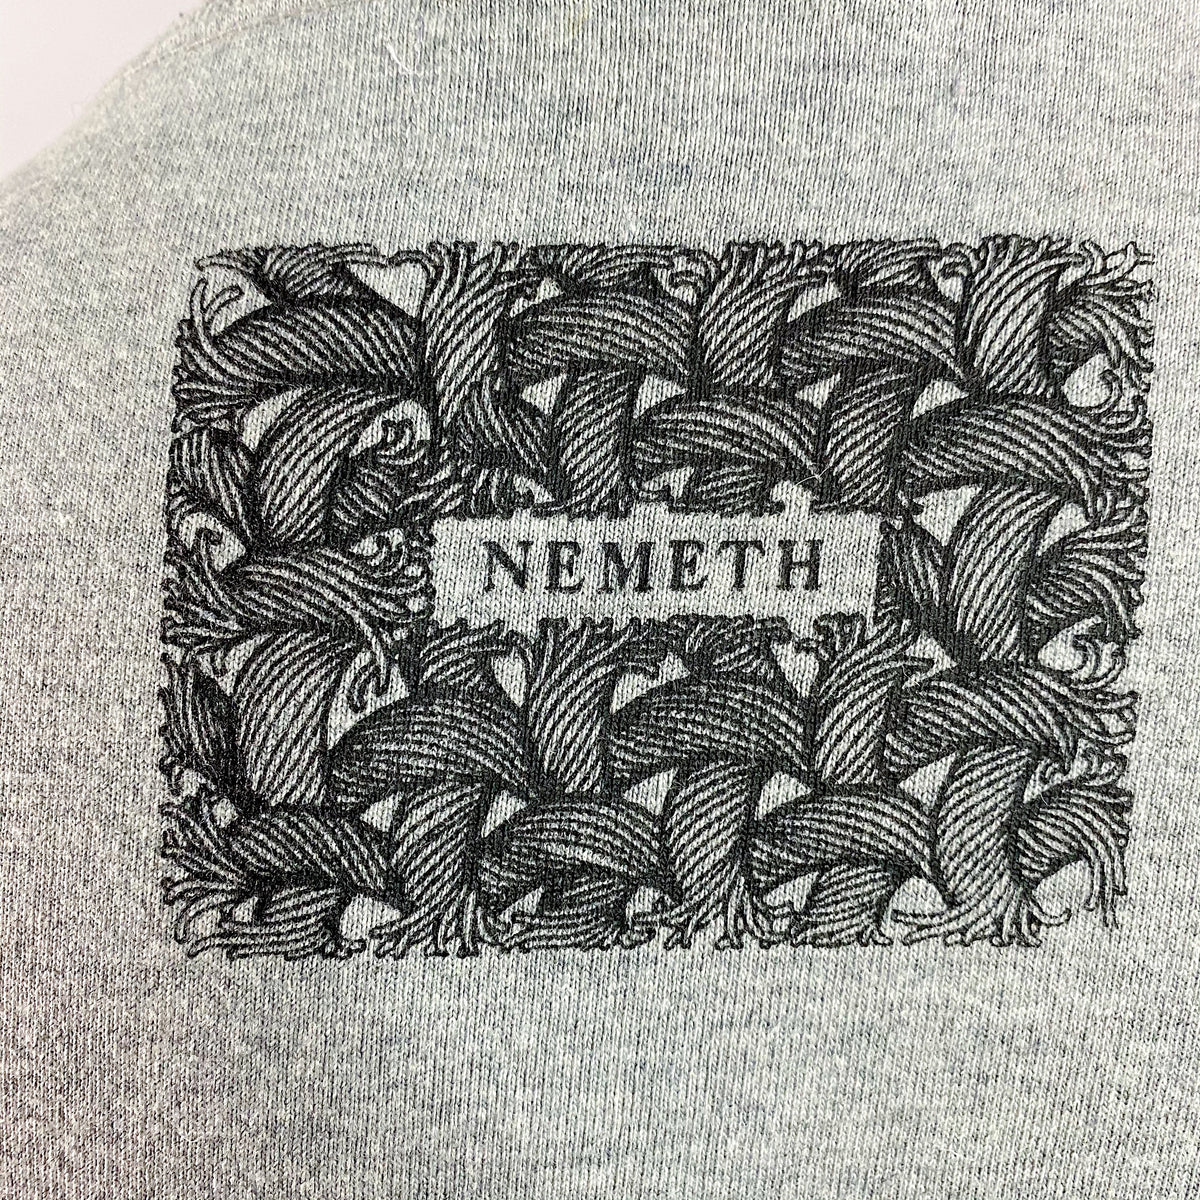 Tshirt – Christopher Nemeth